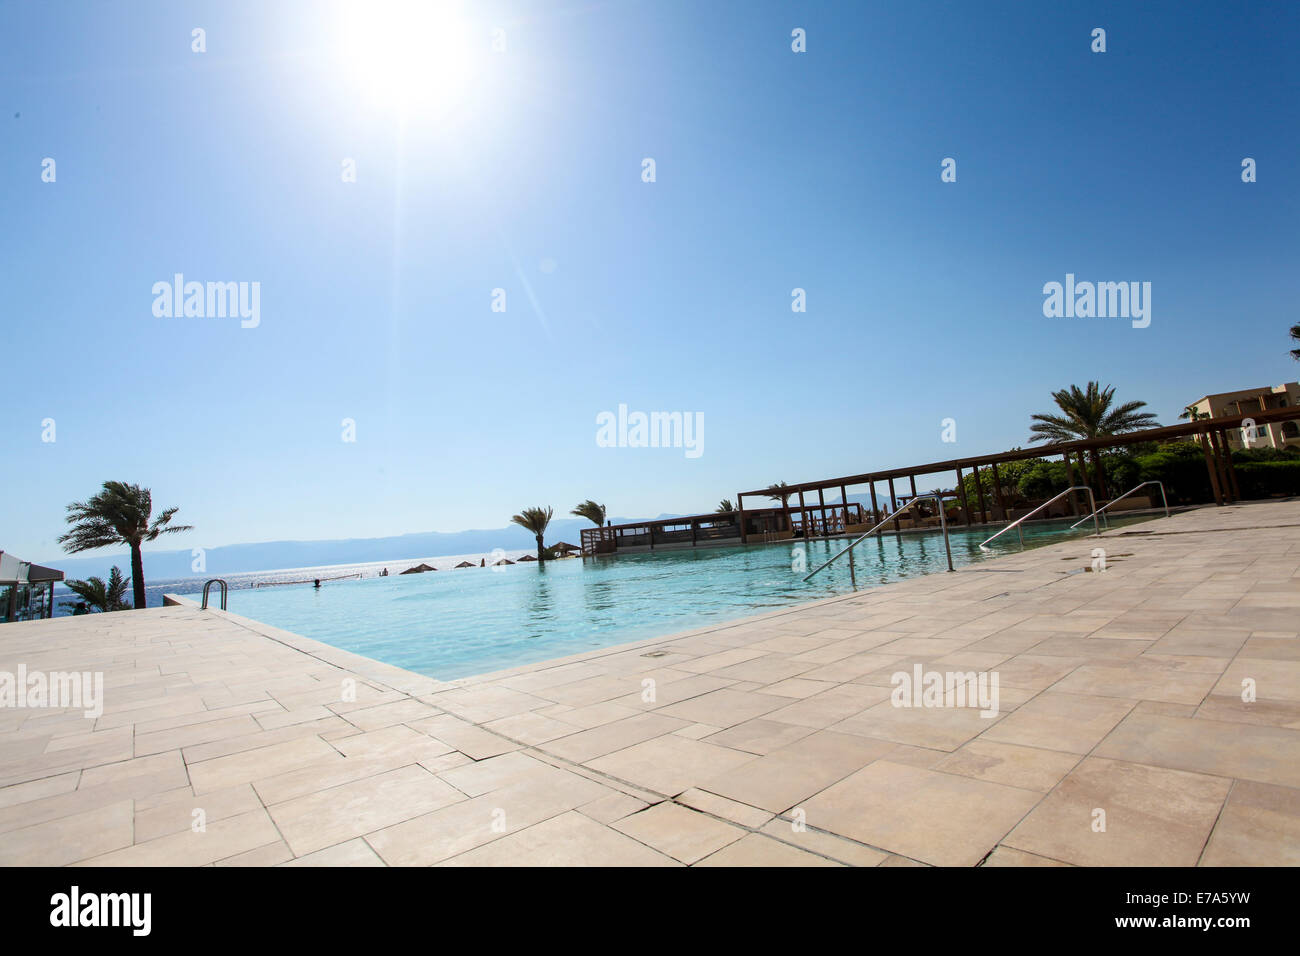 Tala Bay, Aqaba, Jordan. Luxury Beach Resort Stock Photo